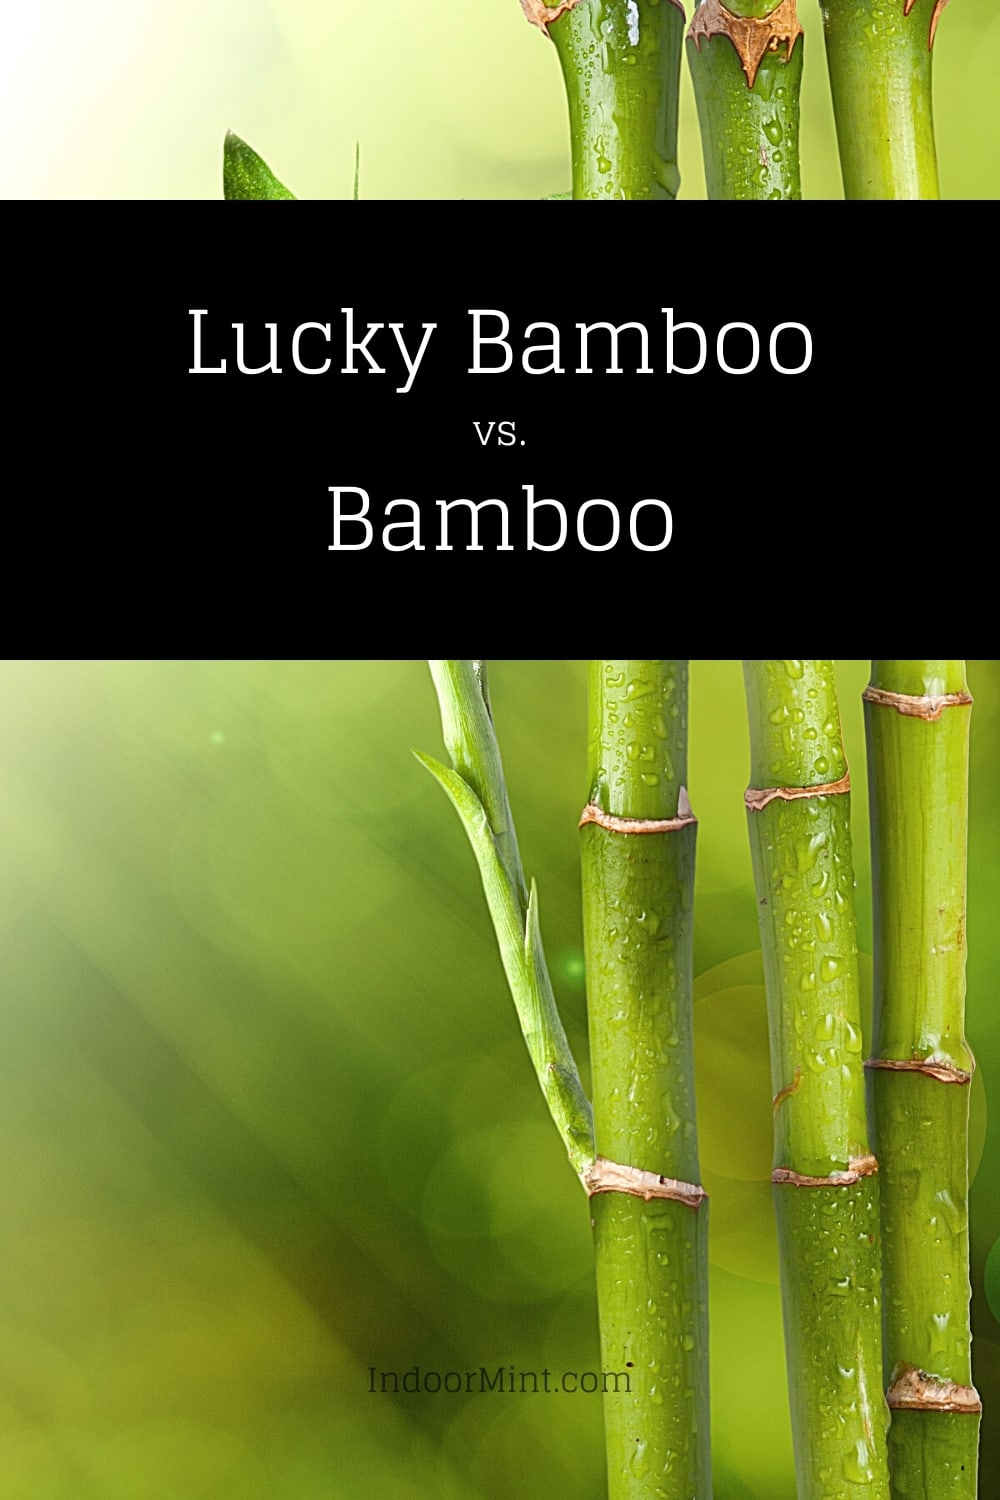 lucky bamboo vs bamboo cover image